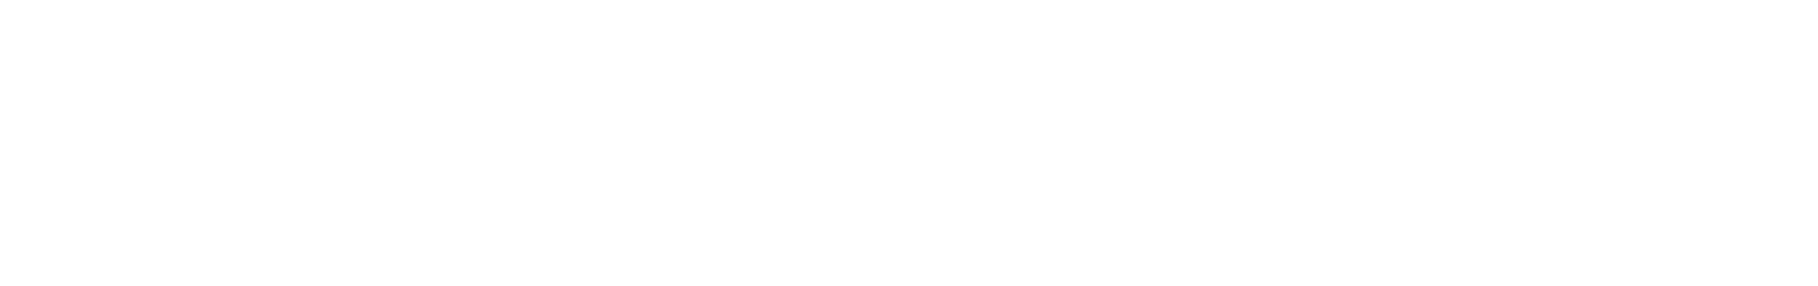 Newmark-Logo-Large-6a-wht-rgb